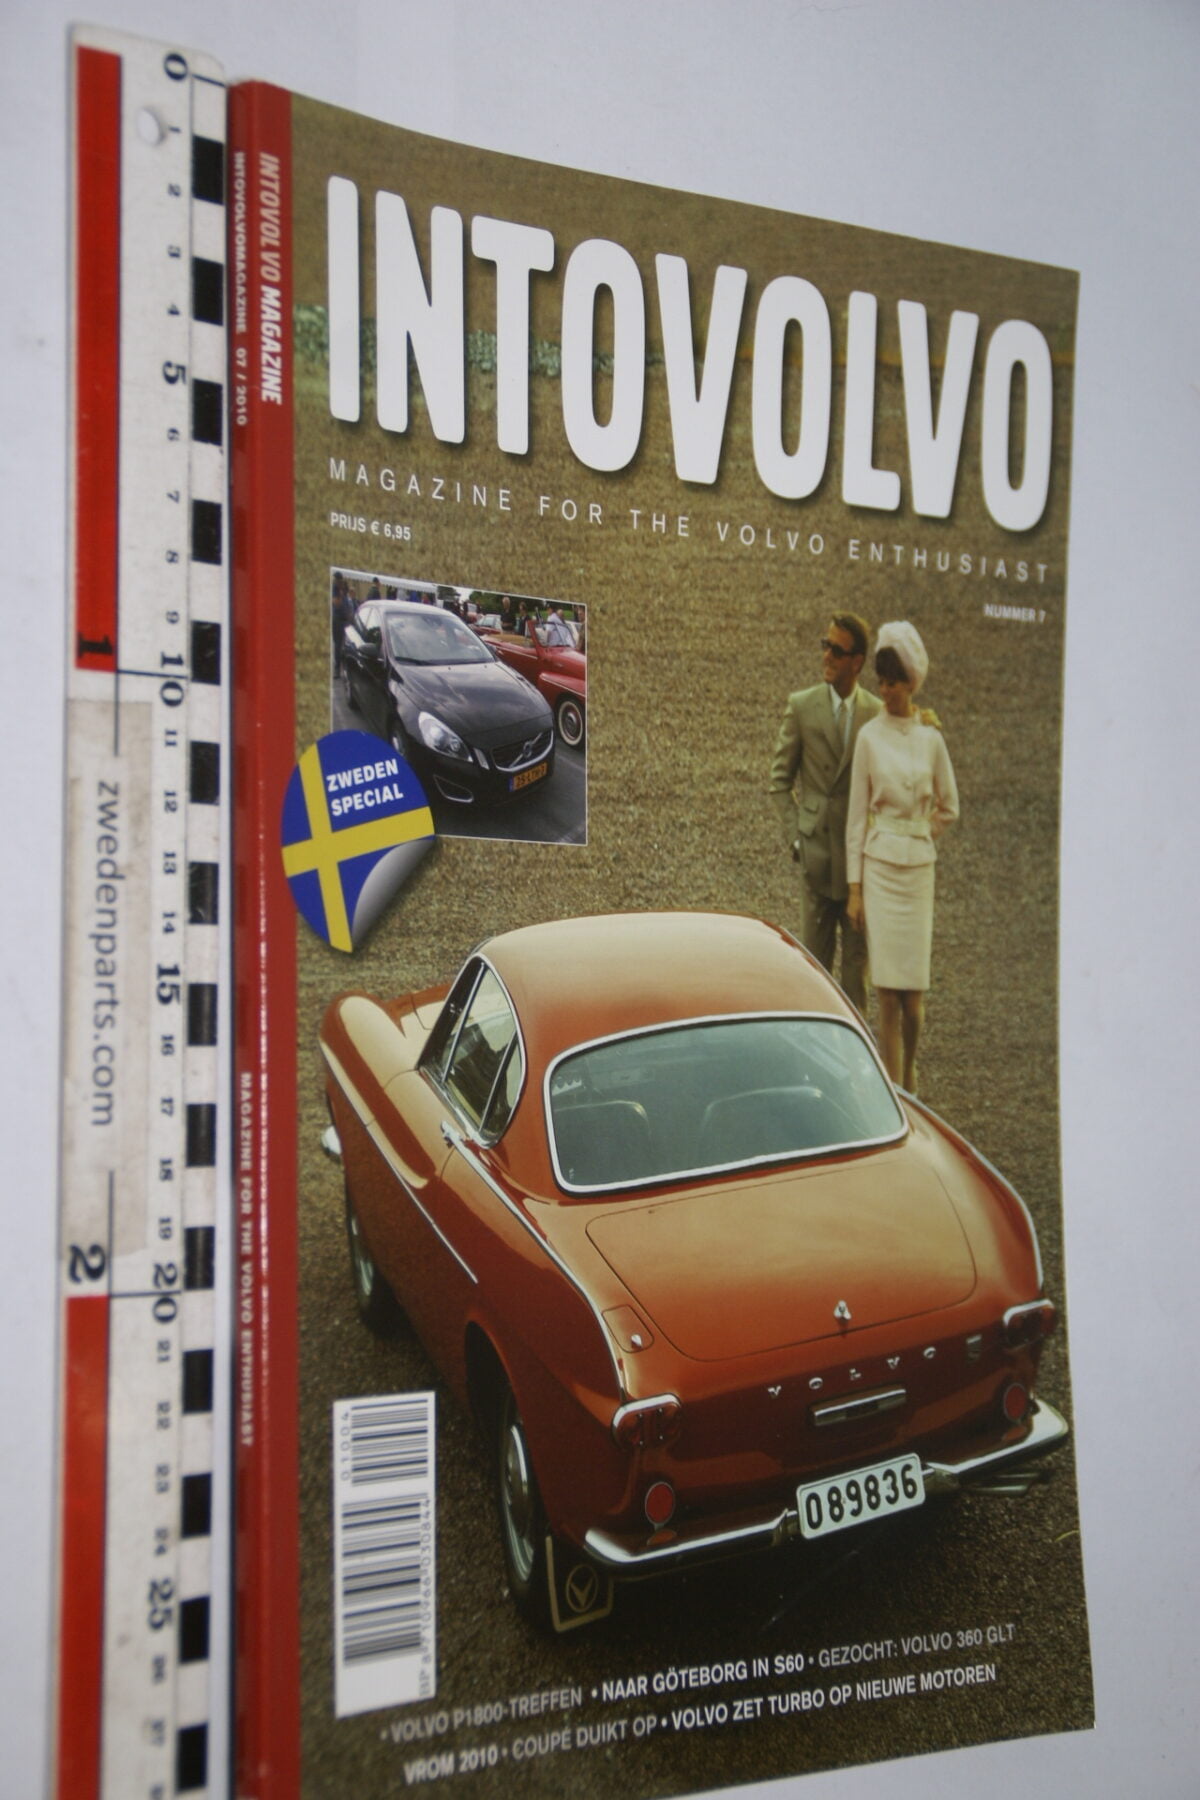 DSC09571 2010 juli tijdschrift IntoVolvo nr 7 Volvo PV50 S60 360GLT-6127f8ad